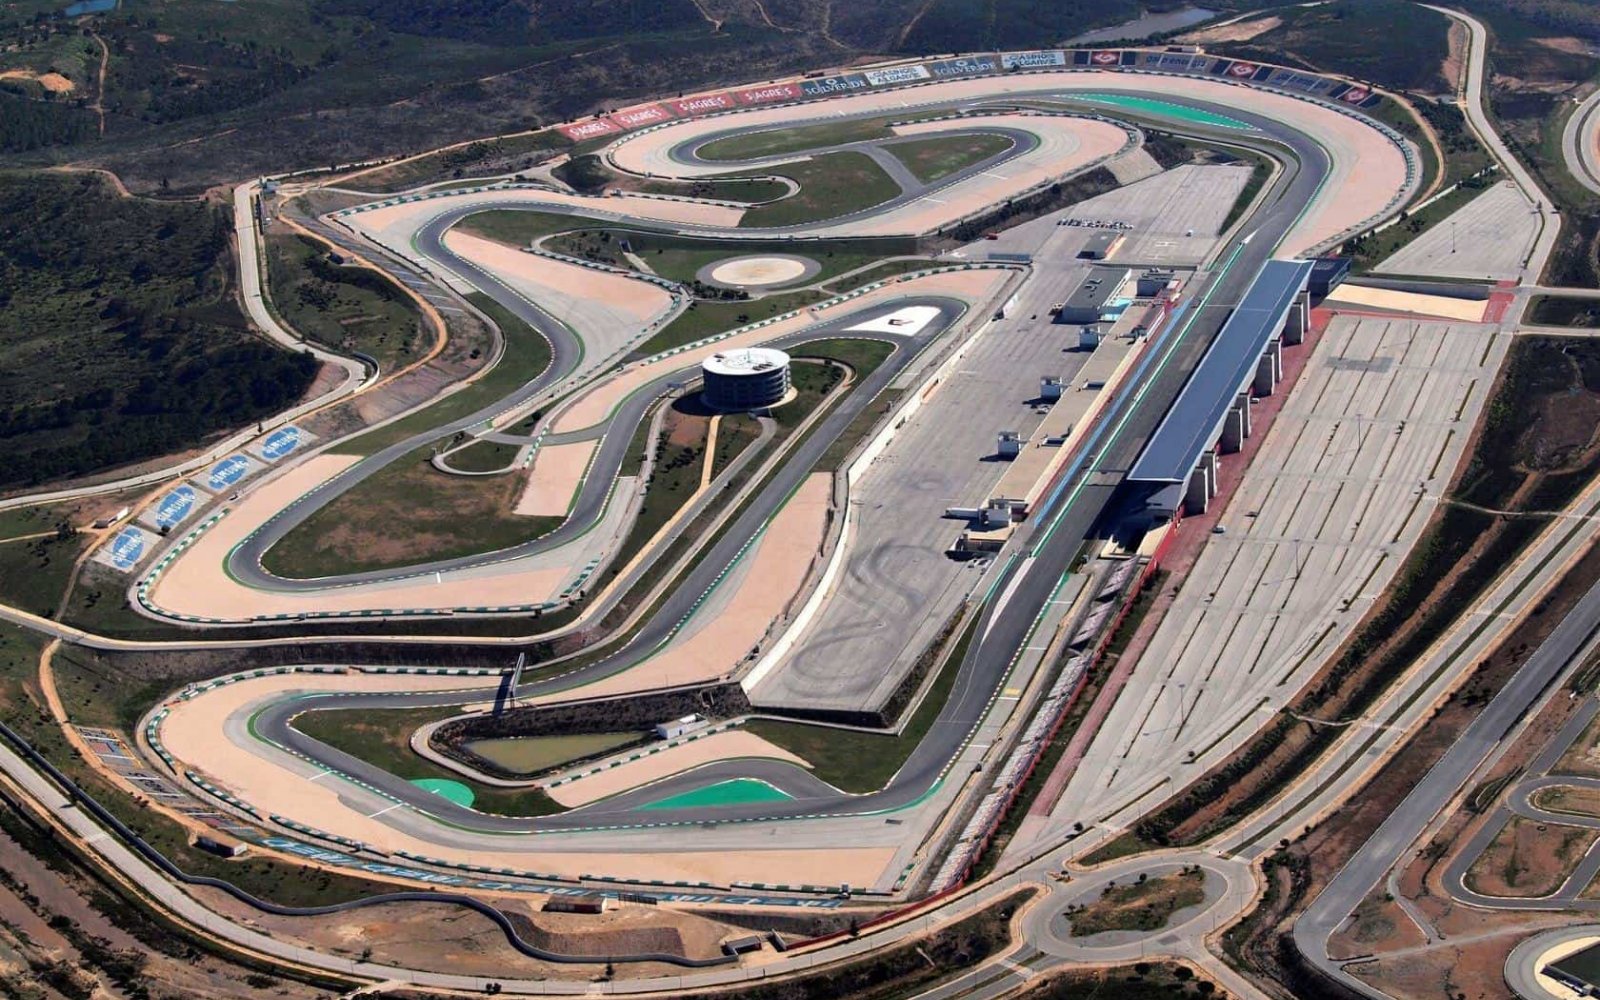 Autódromo Internacional do Algarve - Portimao